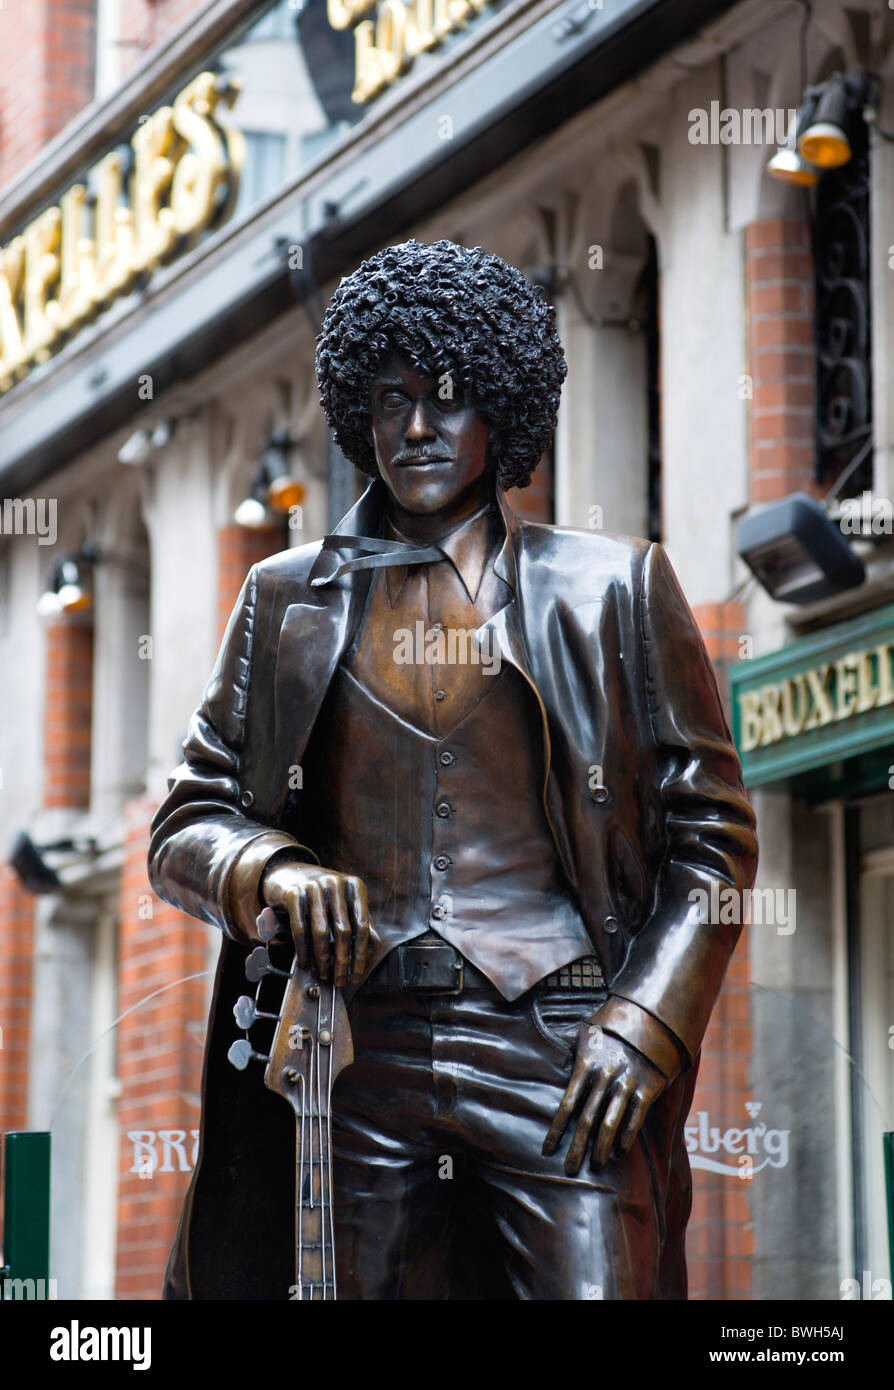 Ireland County Dublin City Statue of Phil Lynott front man of Irish rock band Thin Lizzy outside Bruxelles bar in Harry Street. Stock Photo